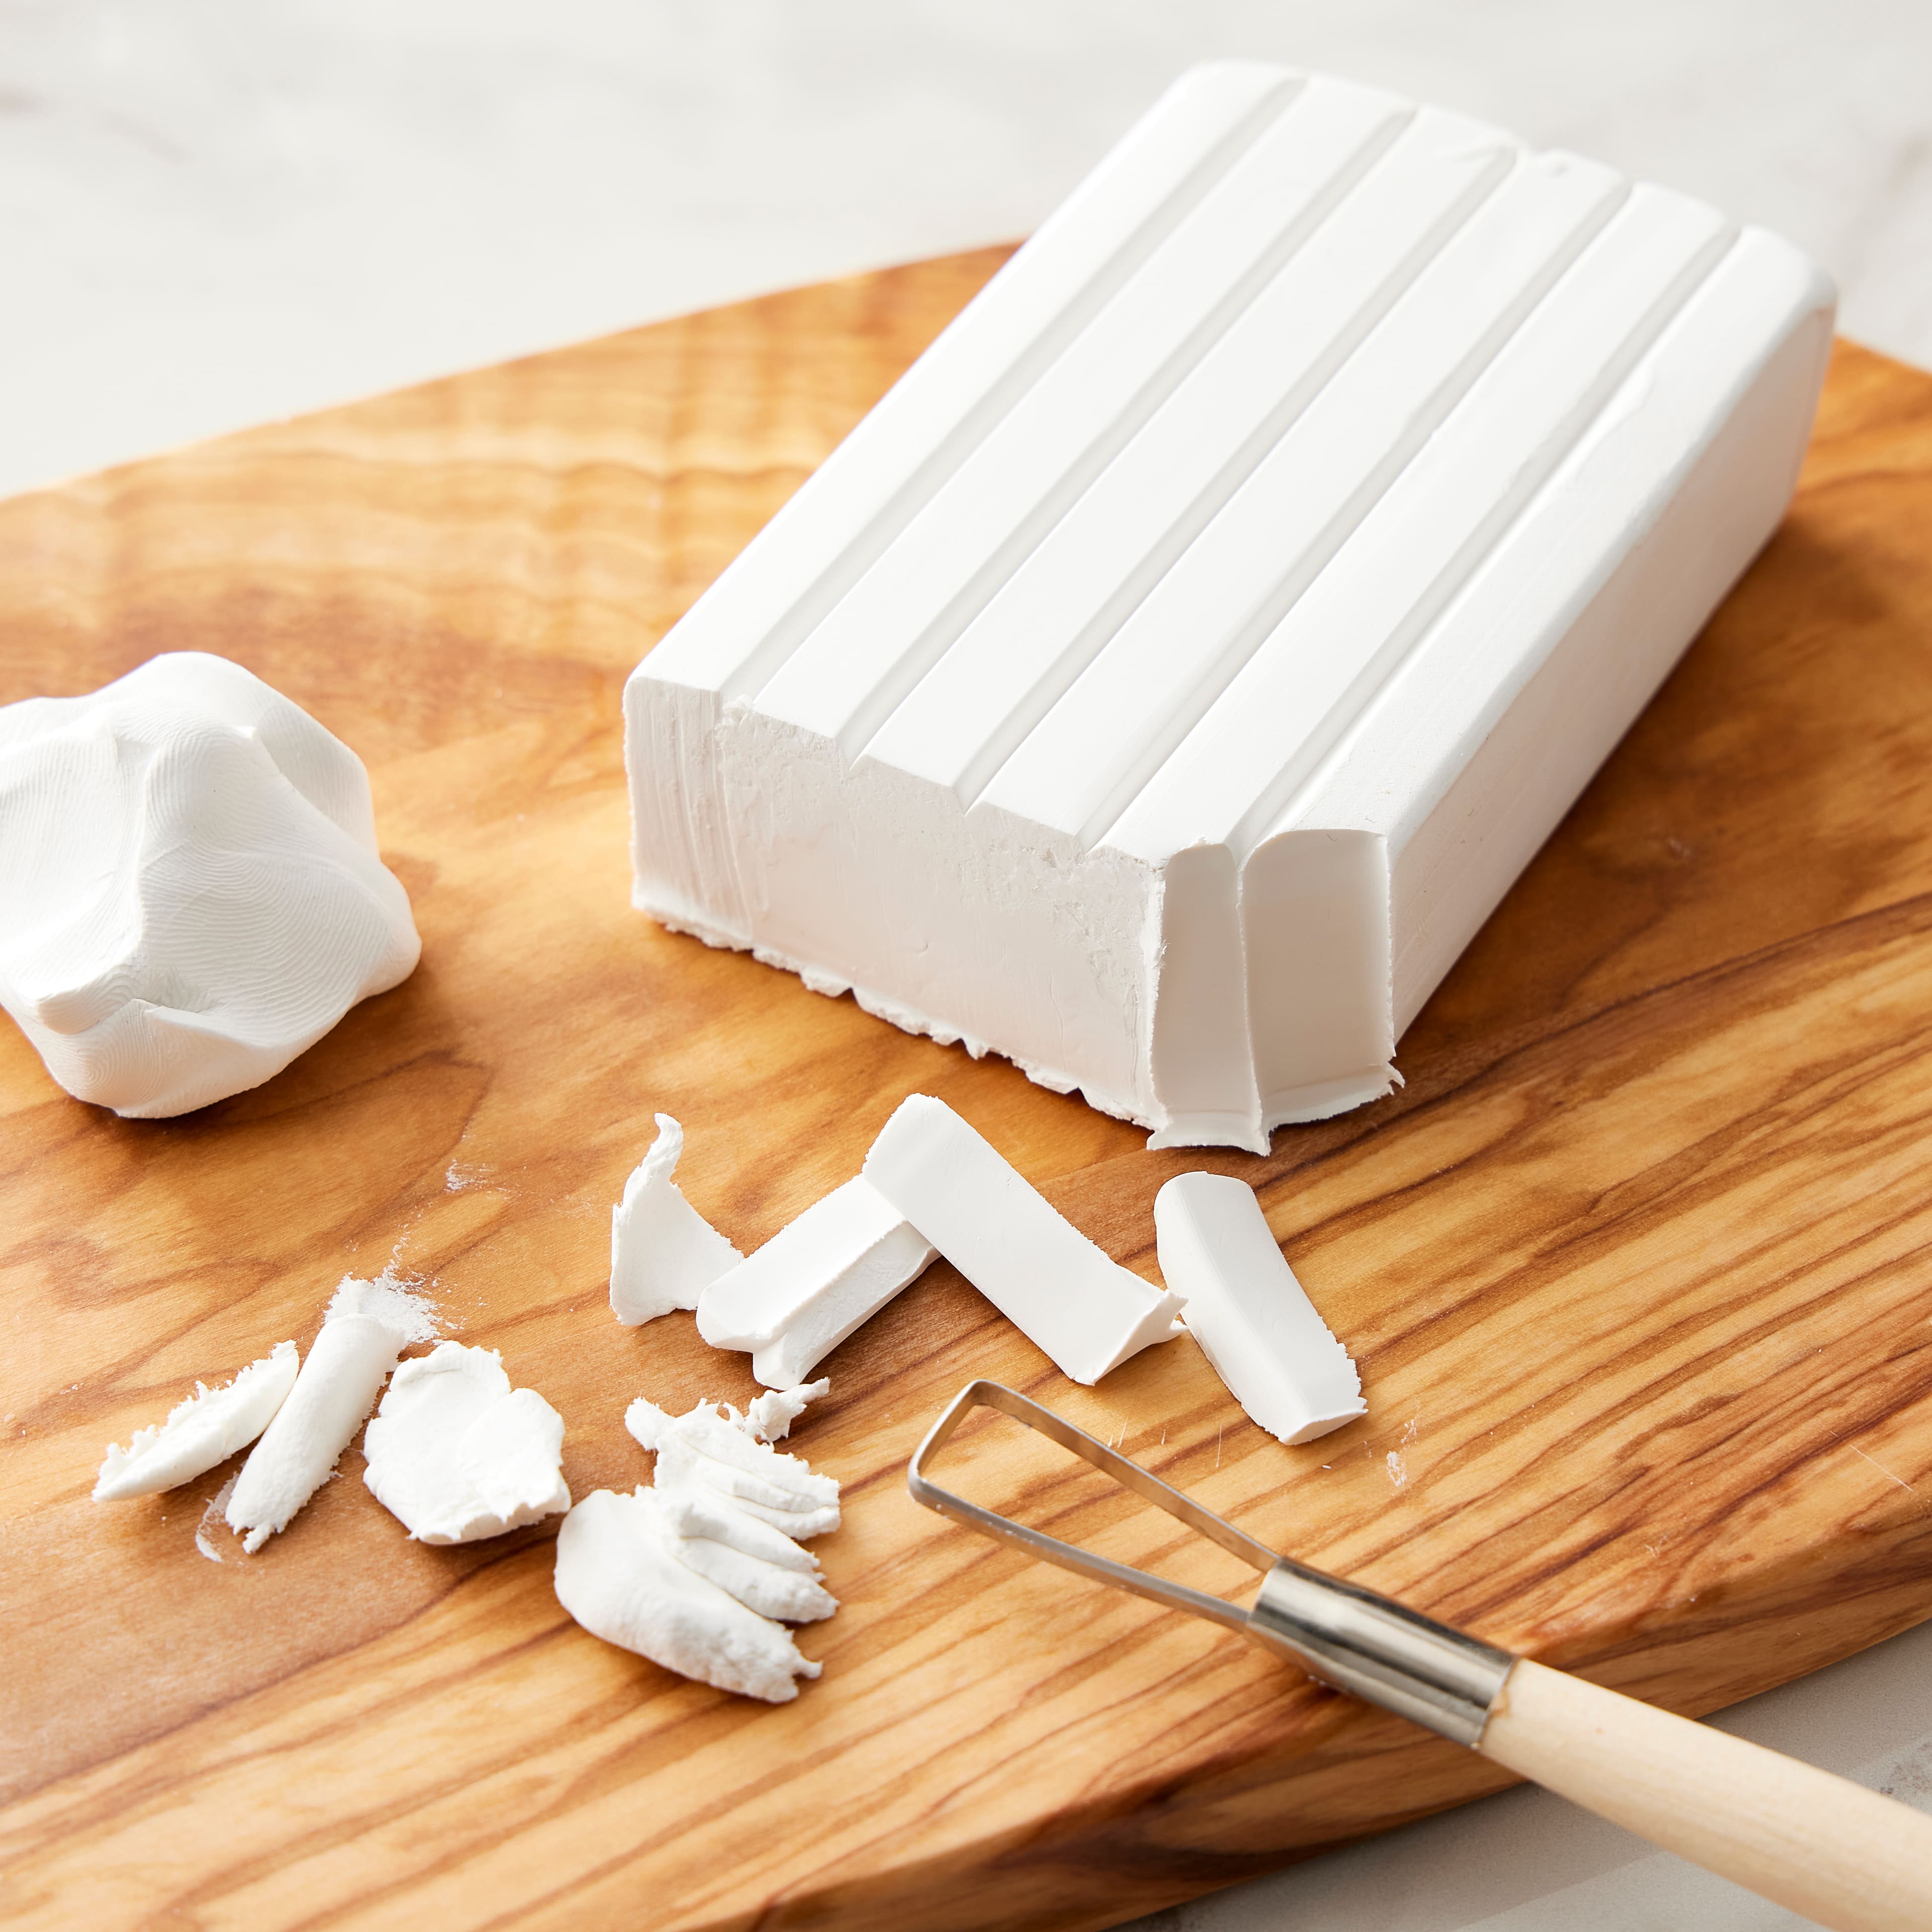 Sculpey® III Oven-Bake Clay - 1lb - White